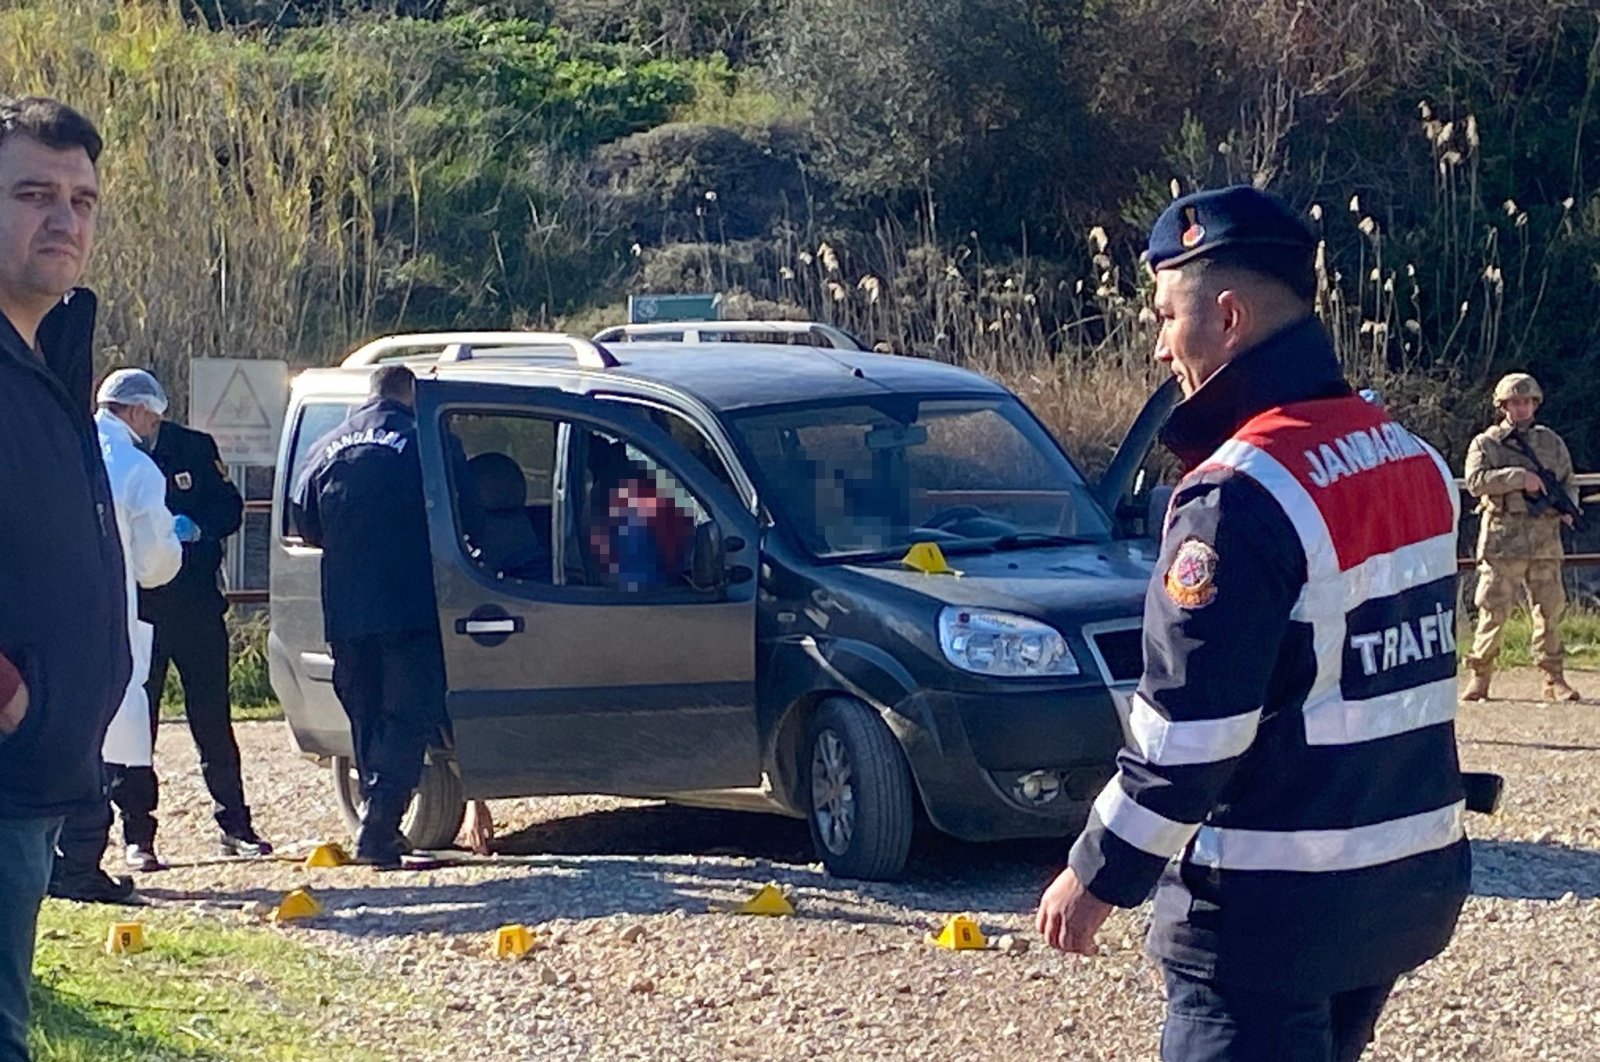 Gendarmerie officers investigate the scene, in Antalya, southern Türkiye, Feb. 2, 2023. (İHA Photo) 